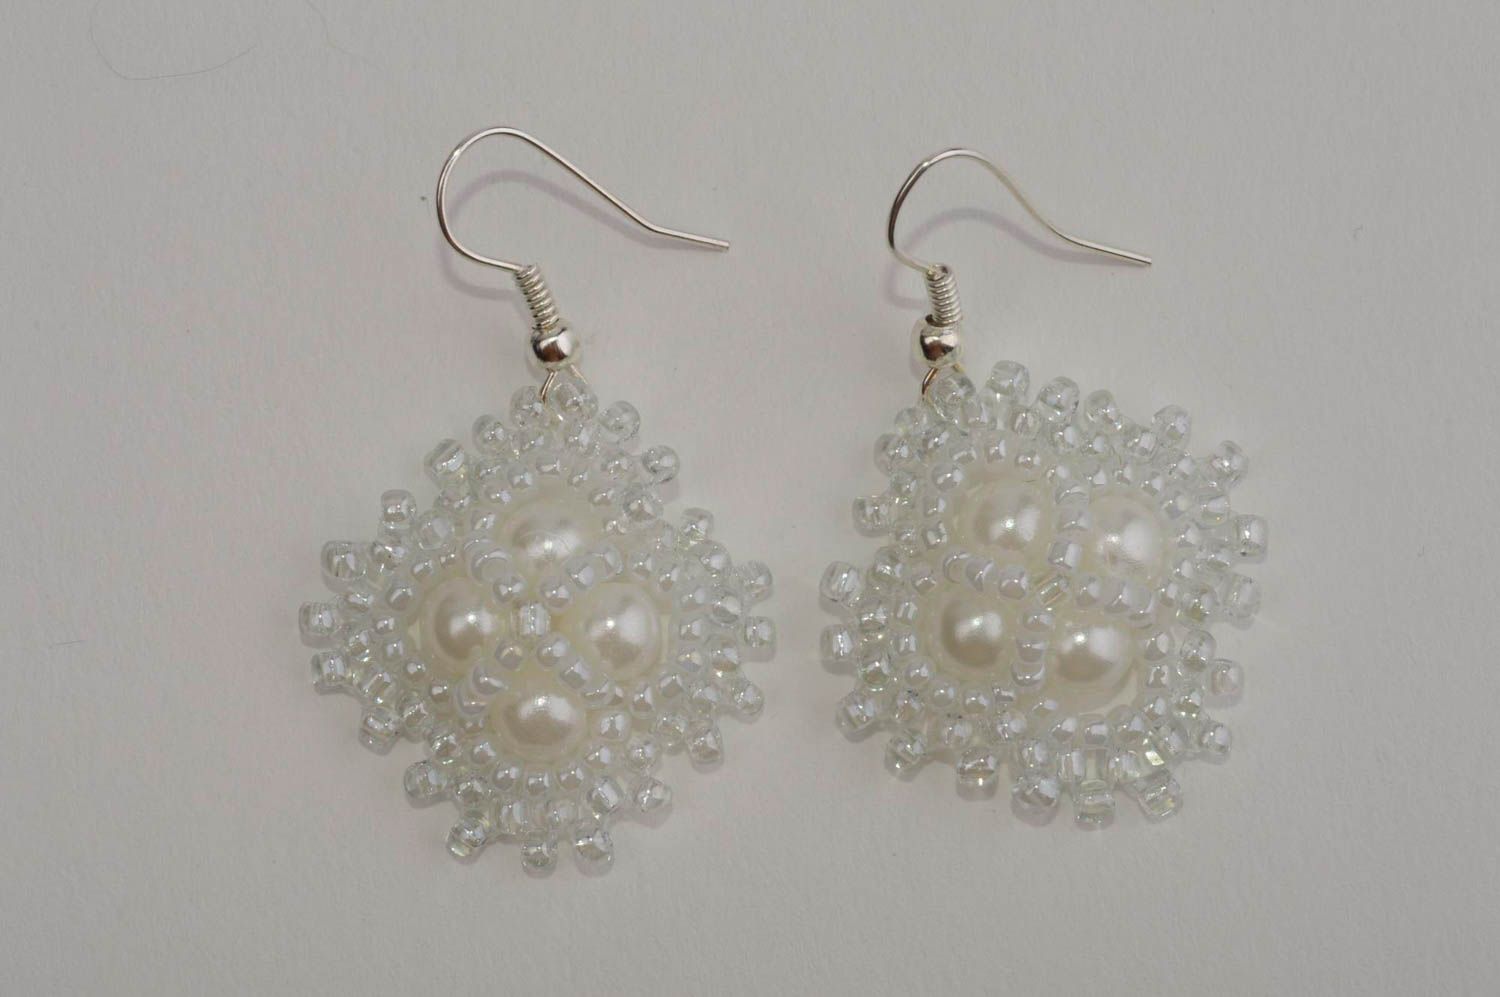 Fashion bijouterie handmade earrings with charms stylish earrings made of beads photo 2